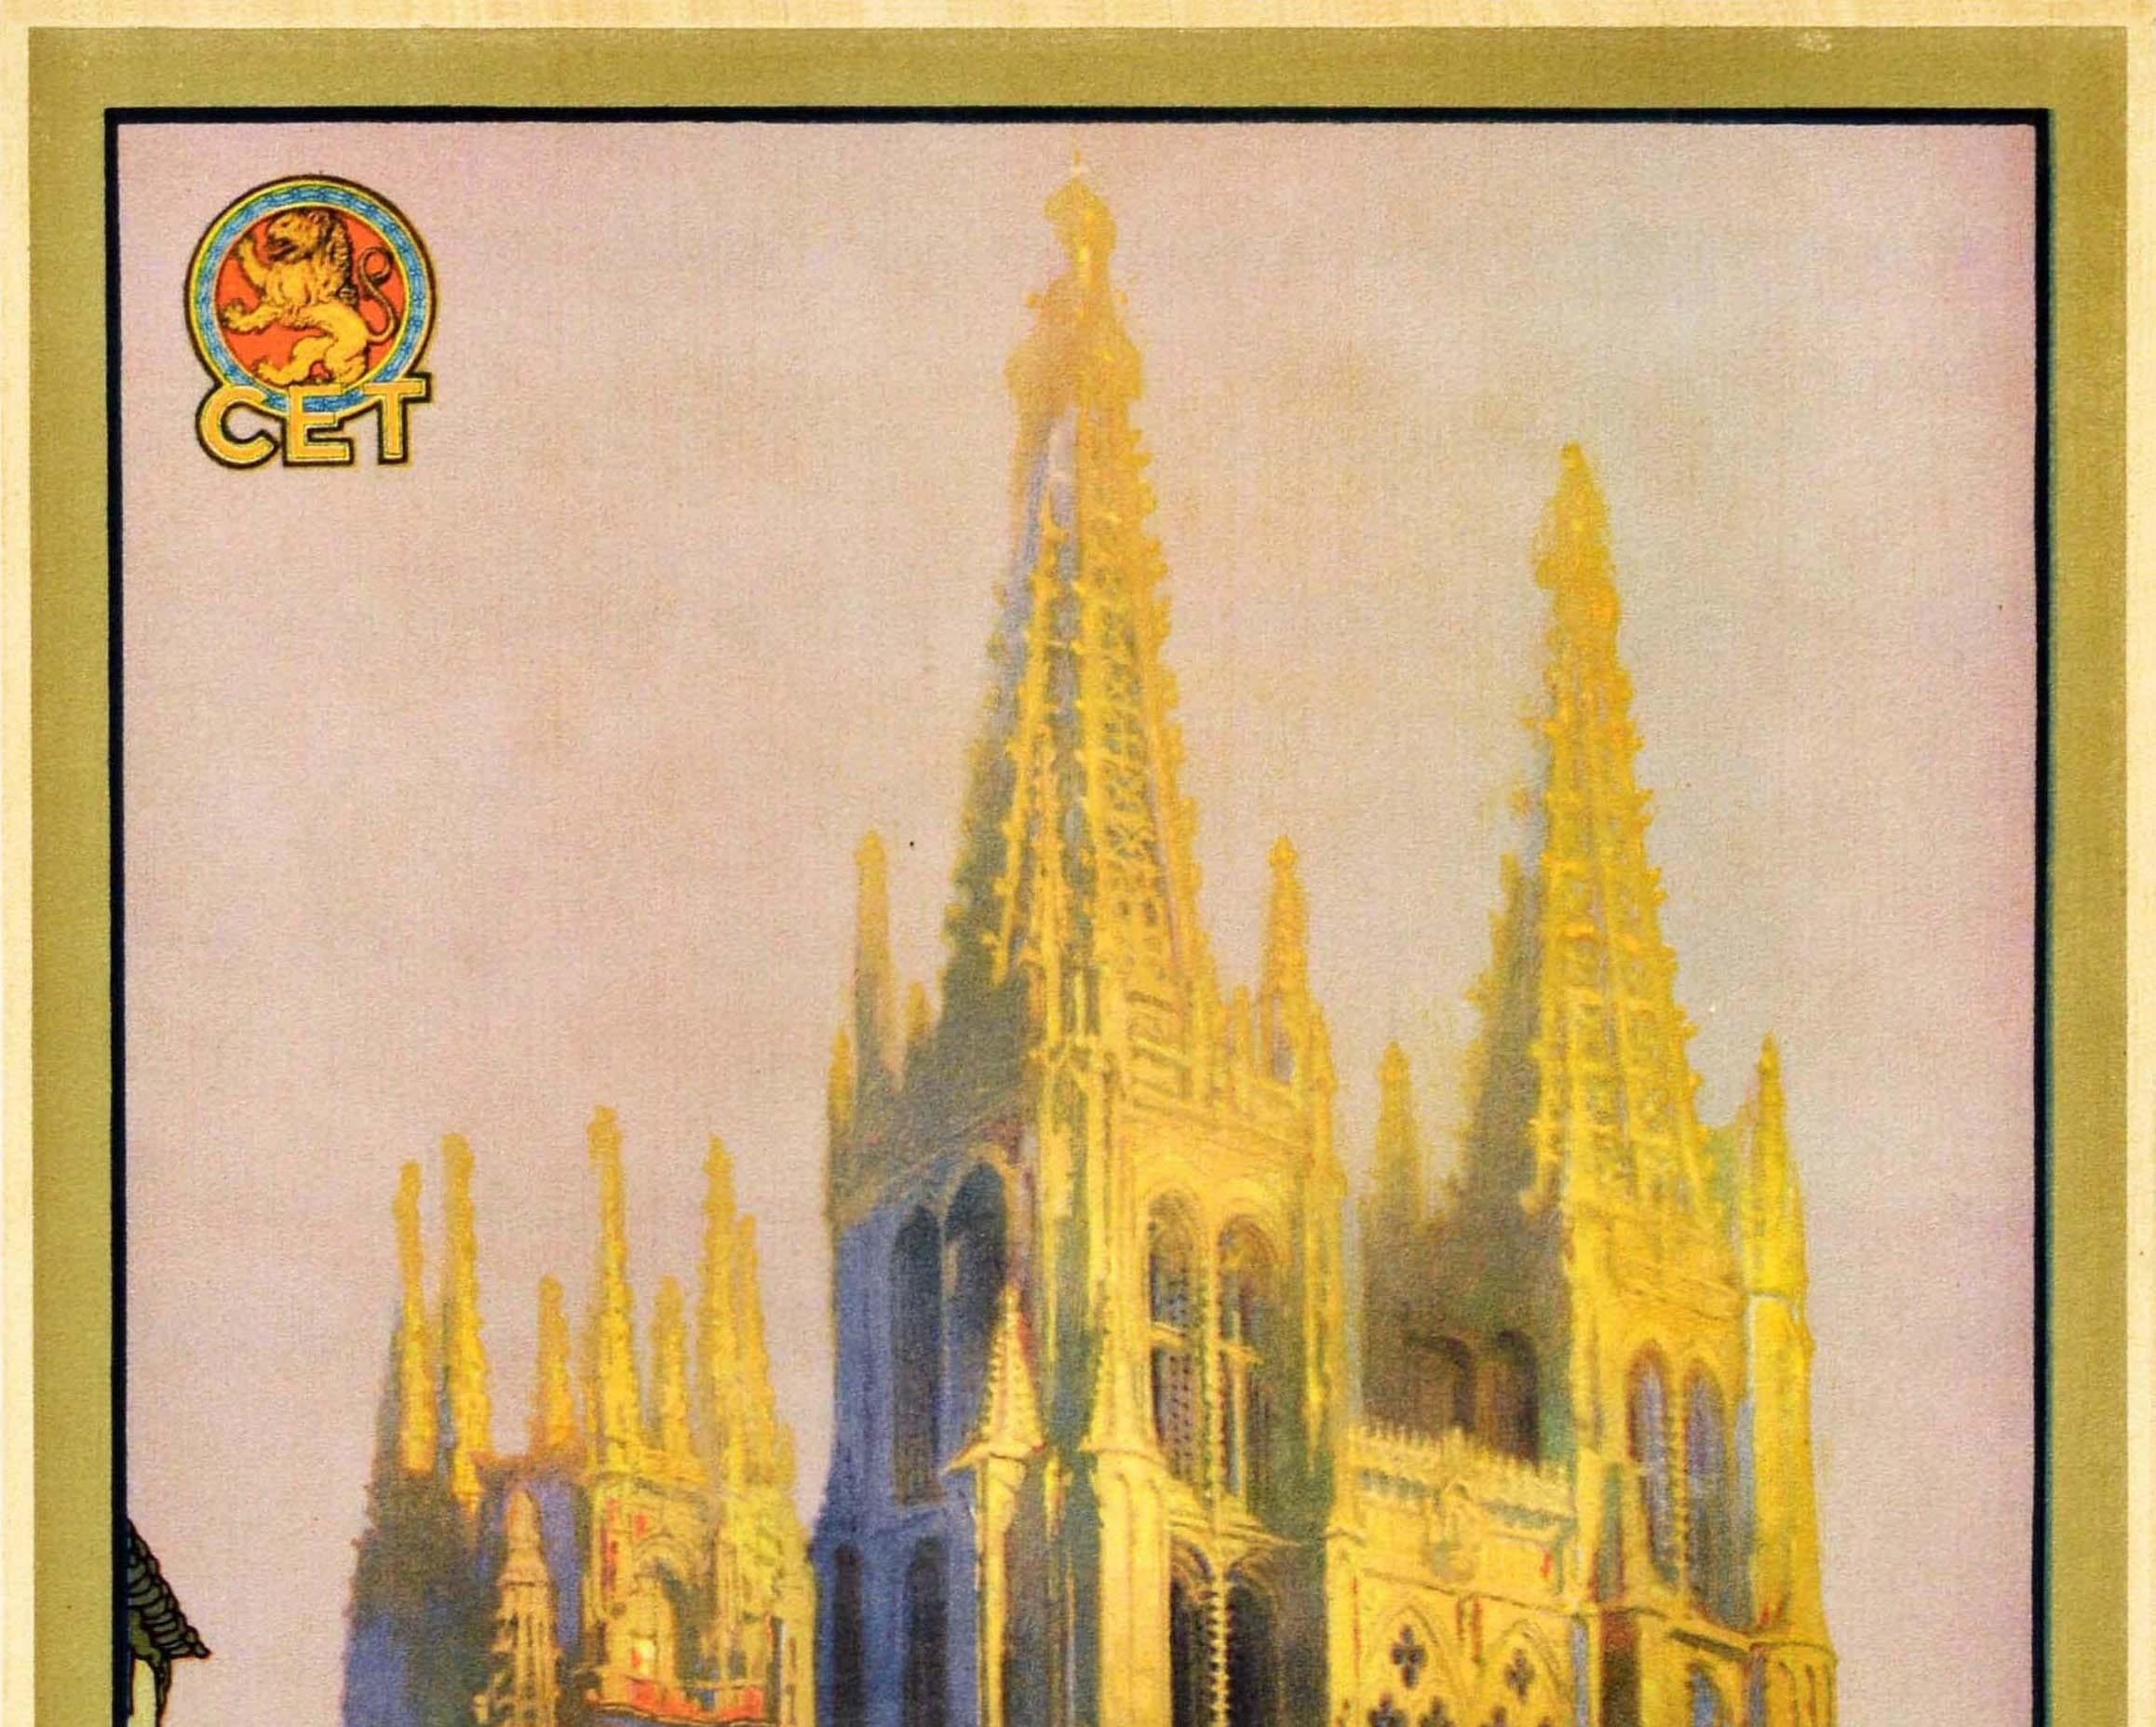 Original vintage travel poster - Visitad Burgos la Ciudad del Cid Campeador / Visit Burgos the City of Cid Campeador - featuring stunning artwork by the Spanish painter Jose Segrelles Albert (1885-1969) depicting the spires of the gothic Cathedral